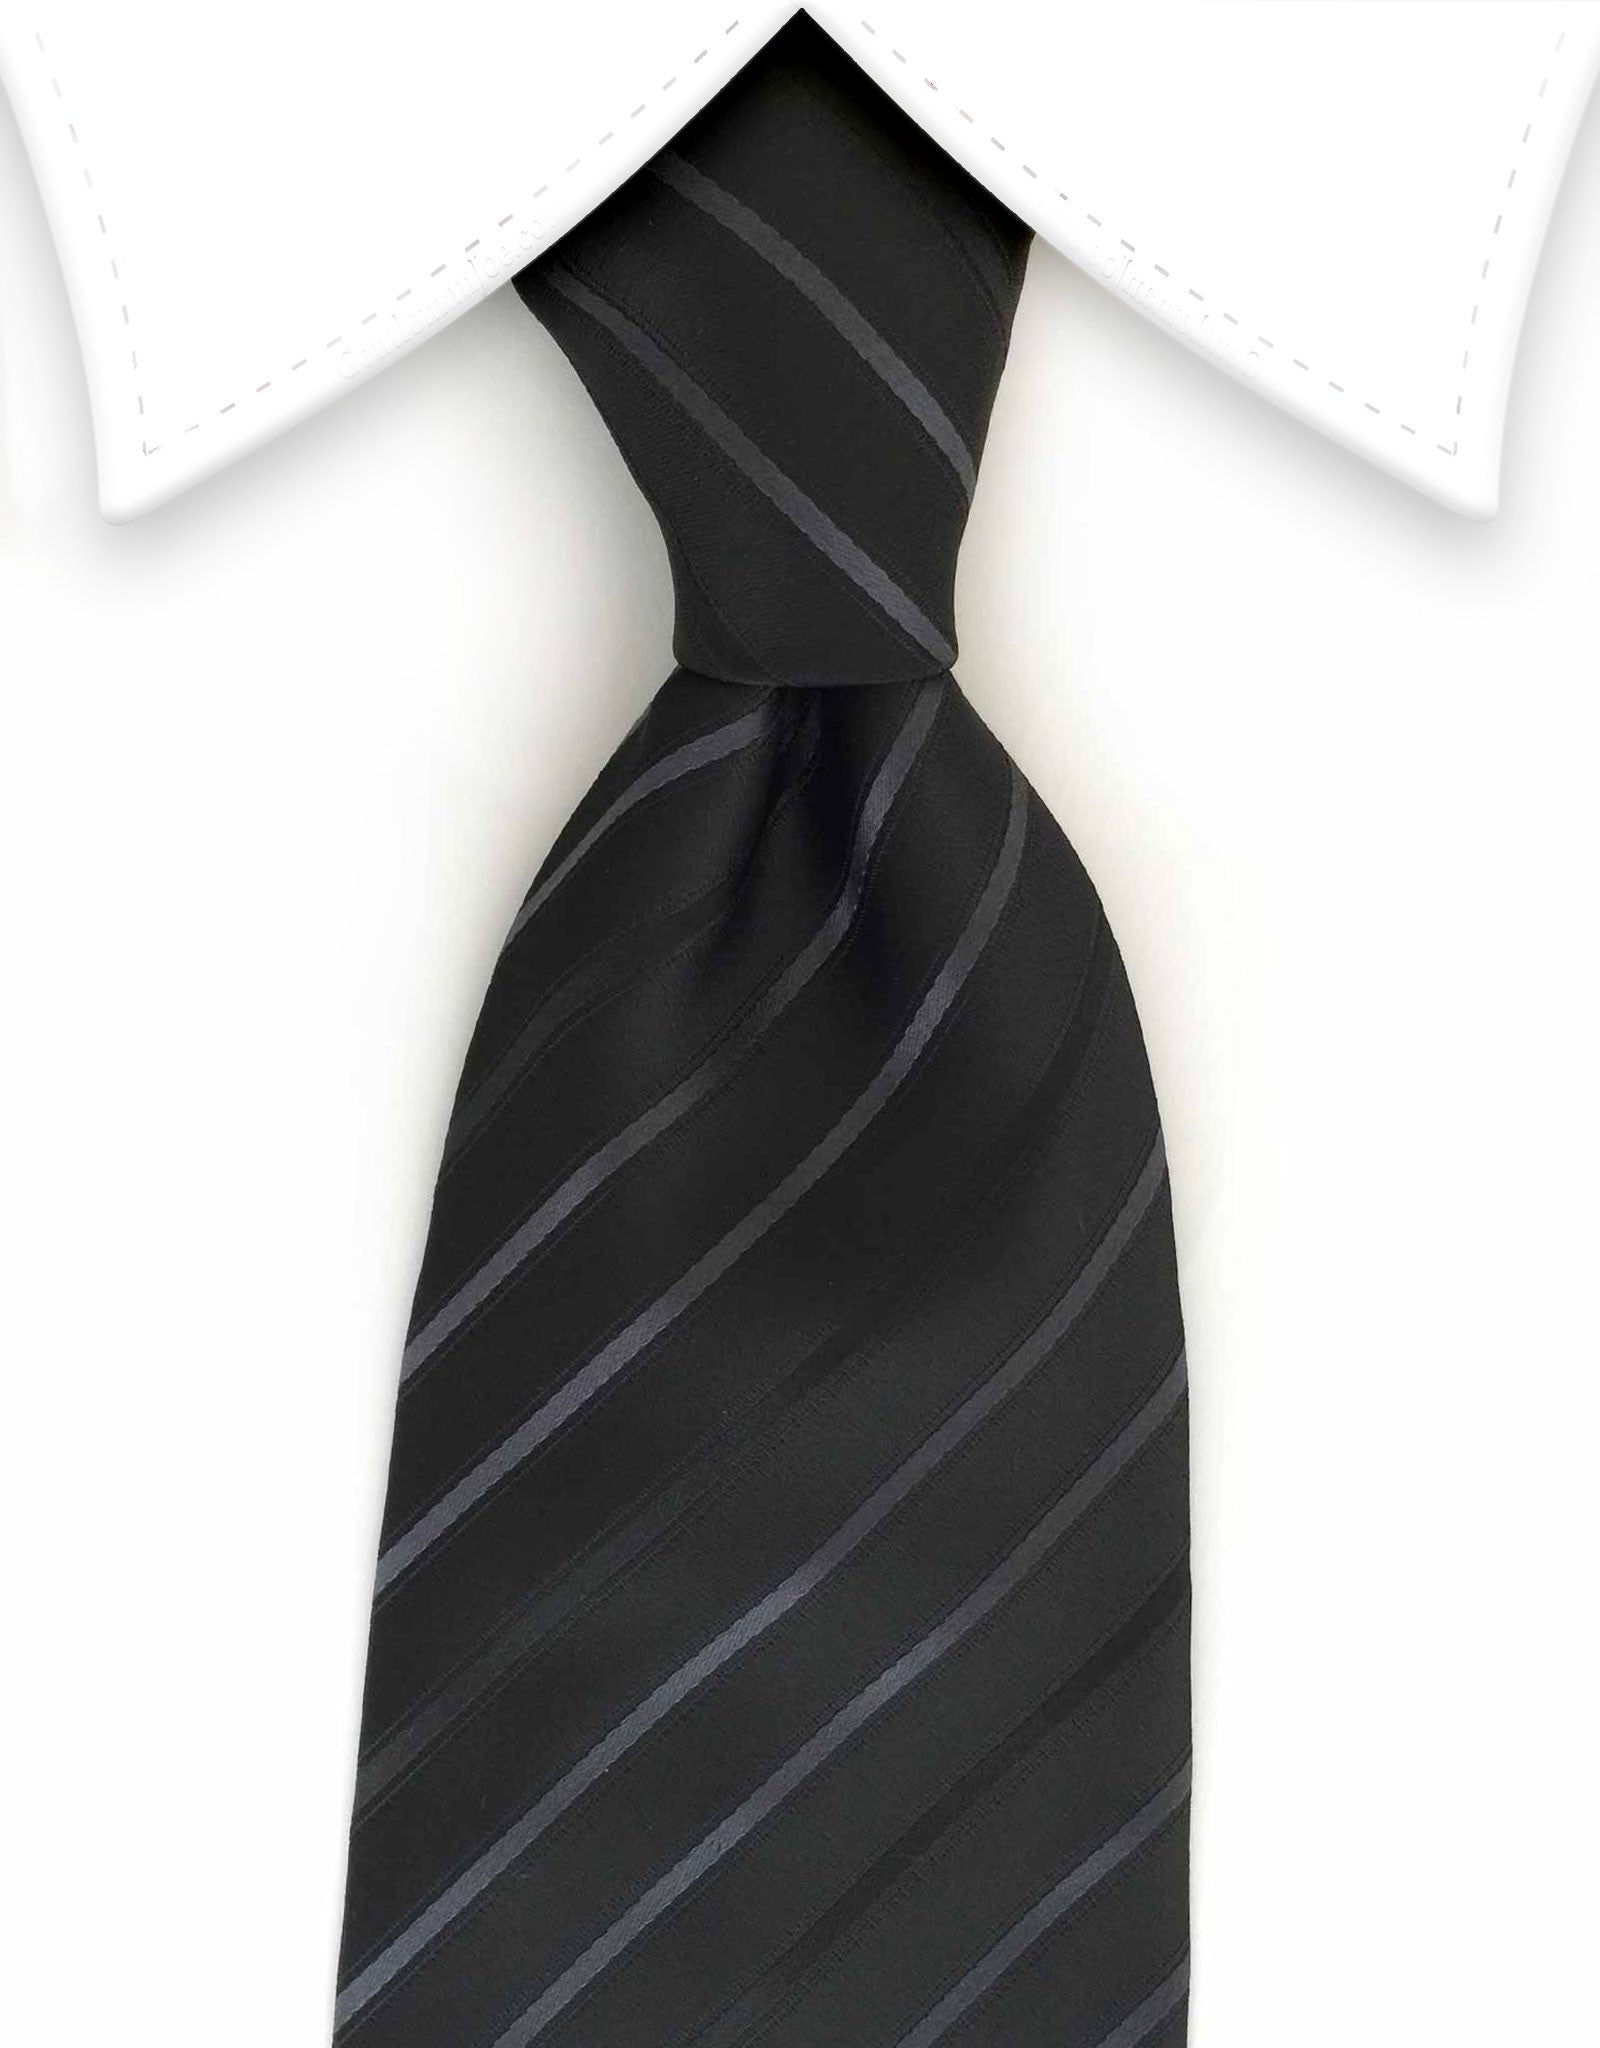 Black and gray striped tie